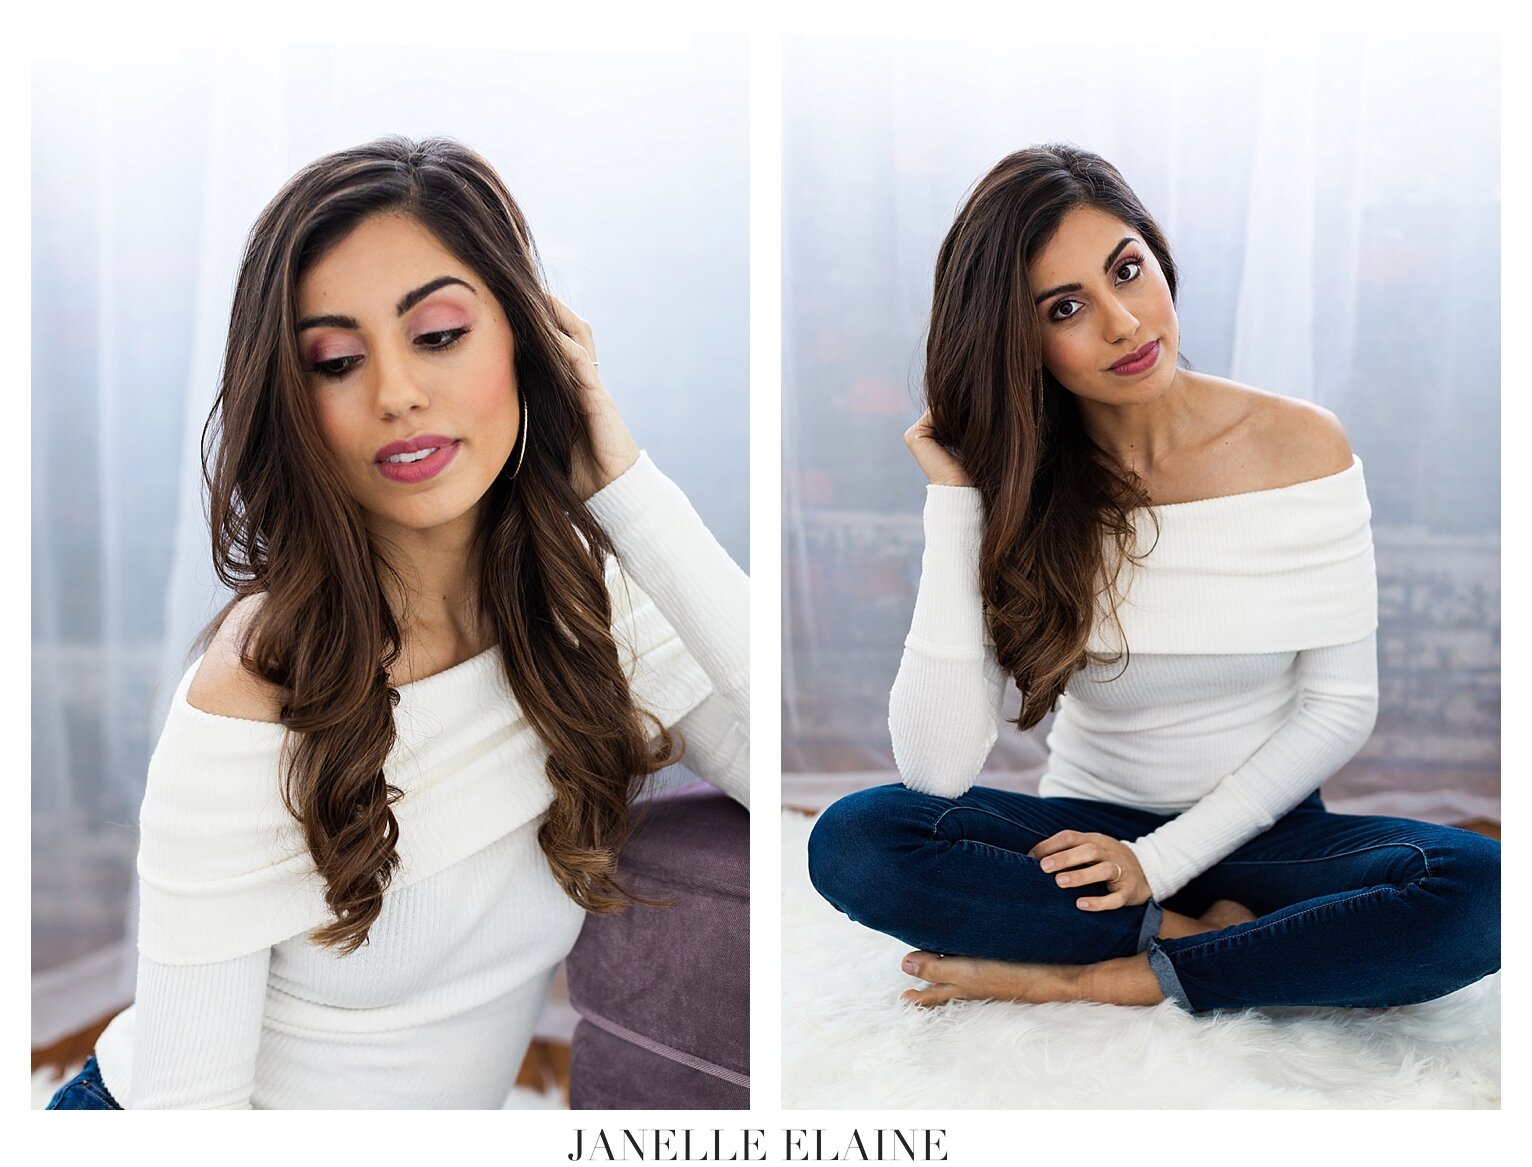 Chamari-Branding-Beauty-Portraits-Seattle-Studio-Janelle-Elaine-Photography-4.jpg